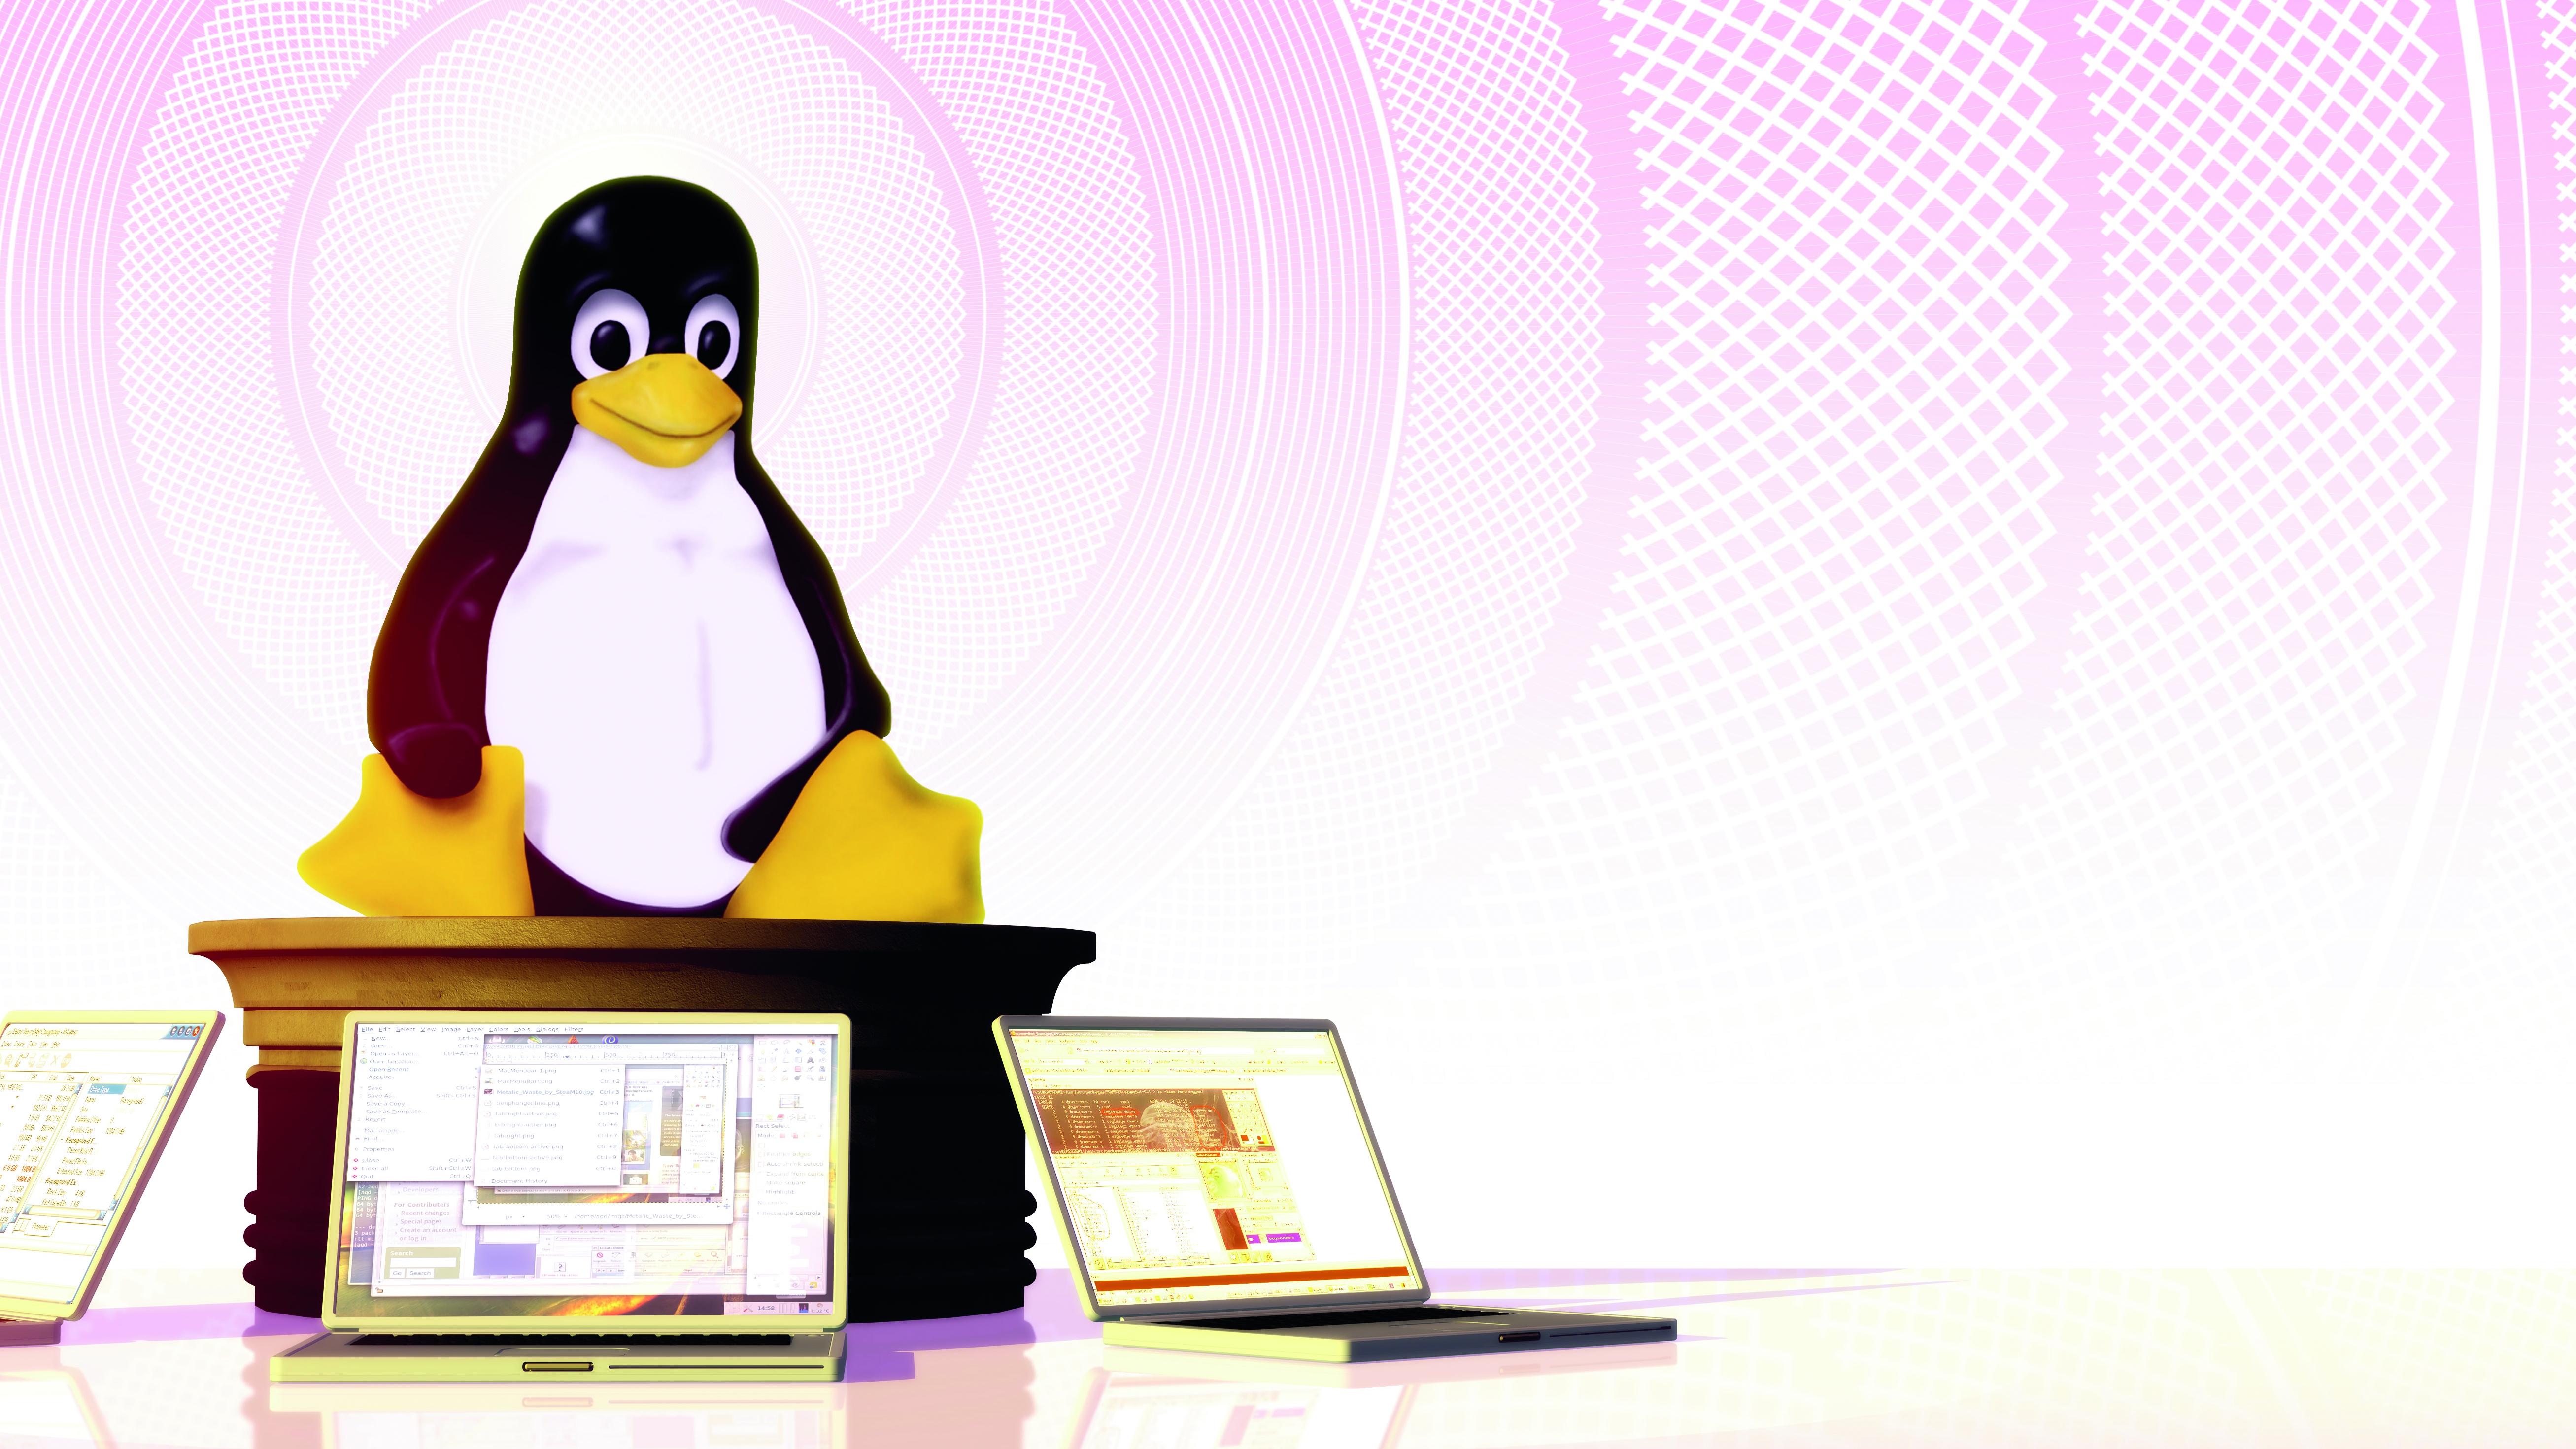 How to use linux. Команды линукс. Терминал линукс. Обои на рабочий стол Linux. Обои на рабочий стол с командами Linux.